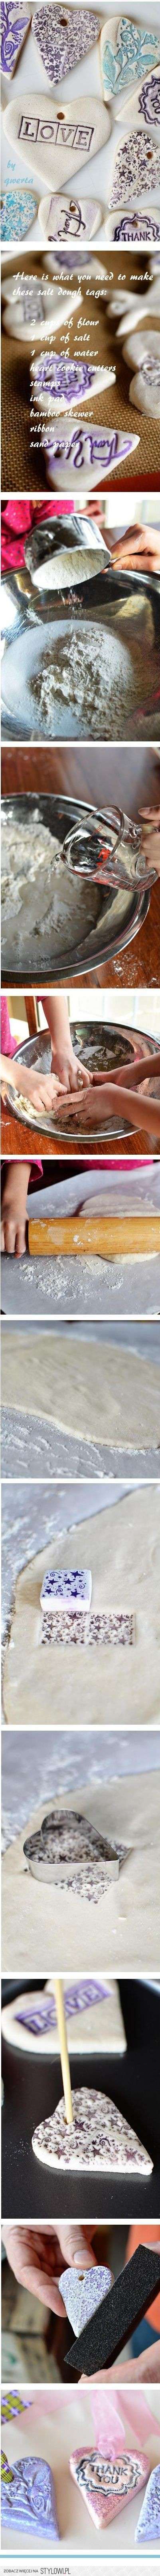 Stamped salt dough.